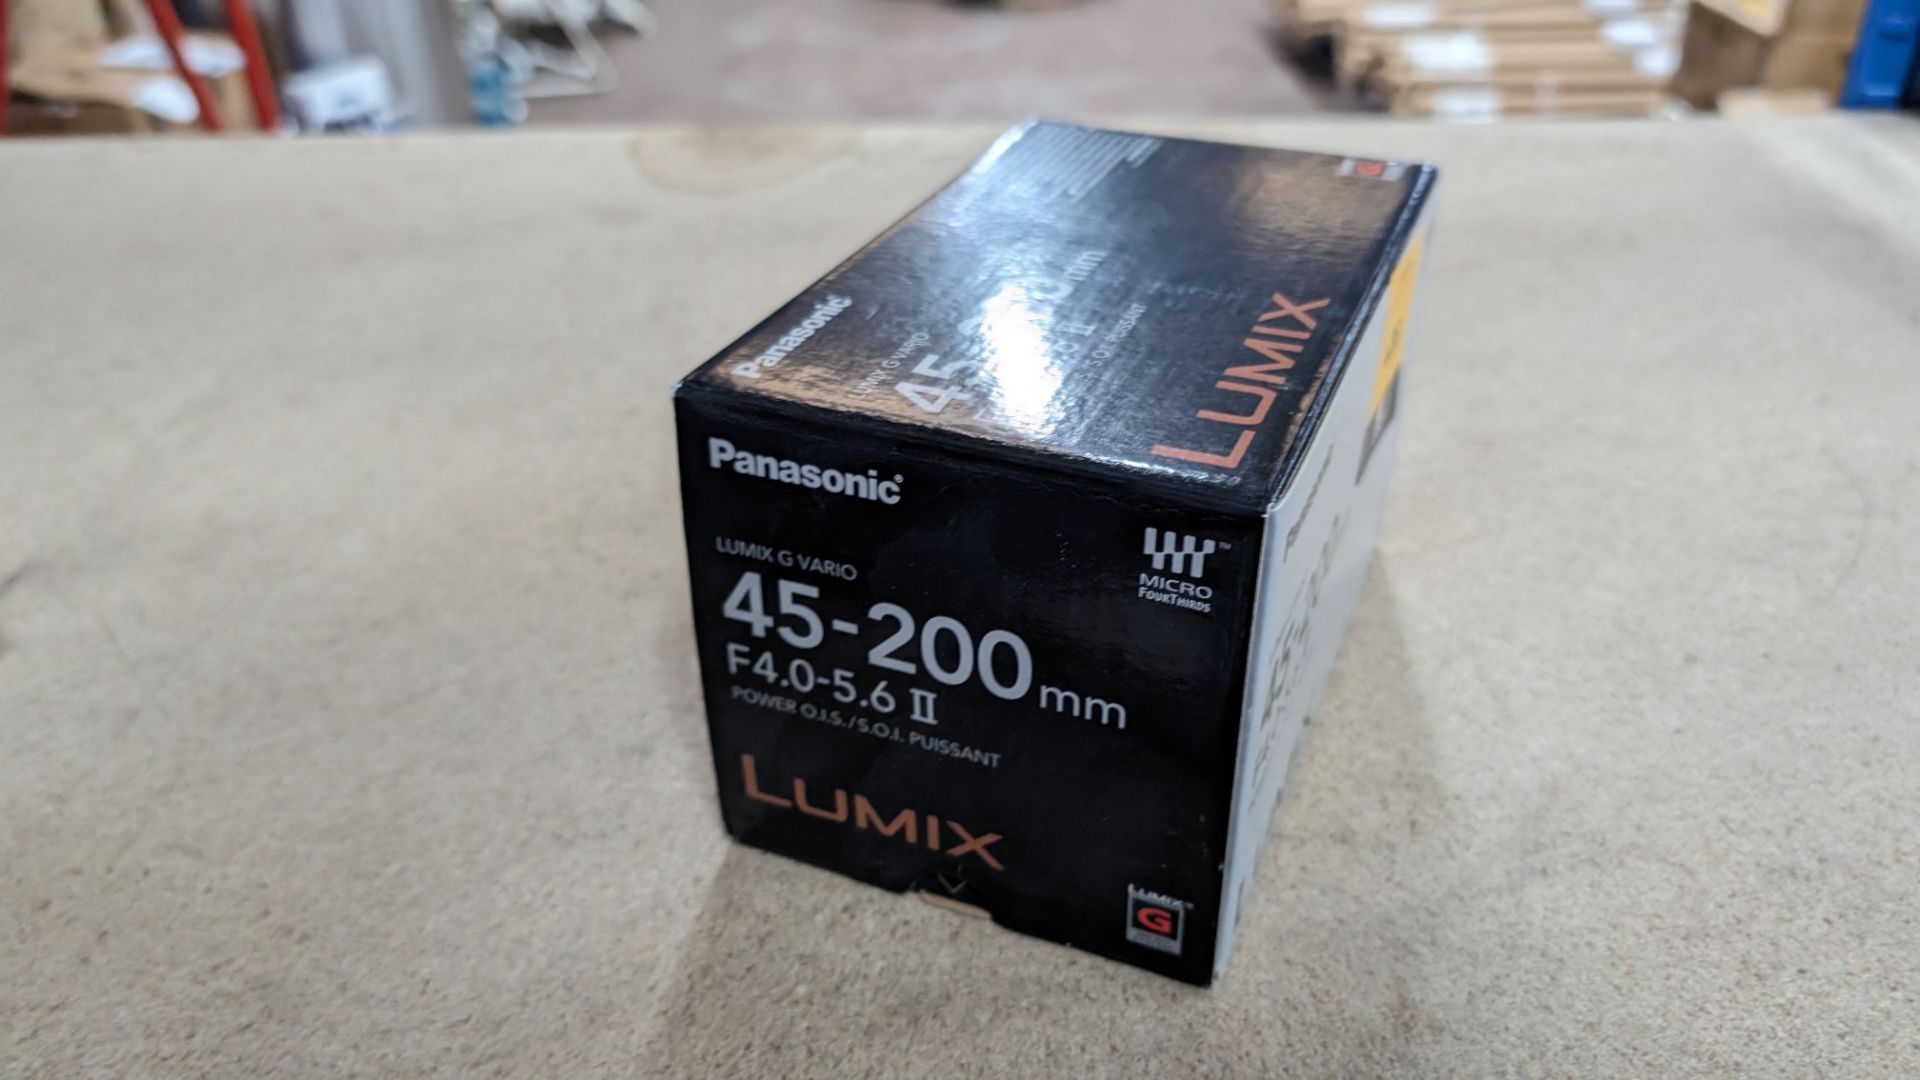 Panasonic Lumix G Vario 45-200mm lens, model H-FSA45200, f4.0-5.6 II - Image 6 of 6